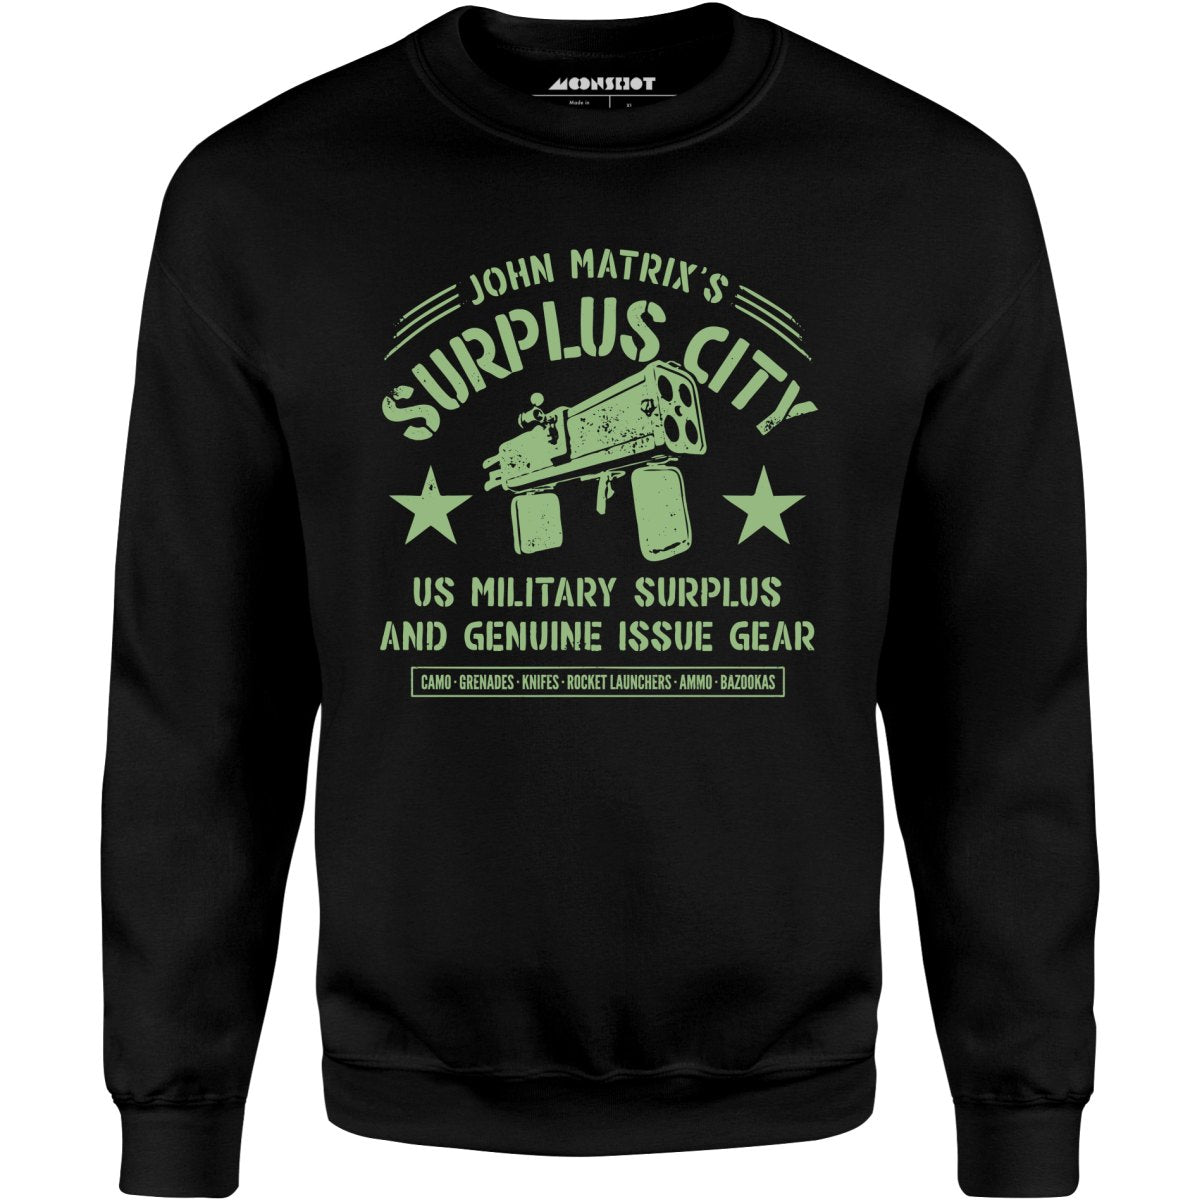 John Matrix's Surplus City - Unisex Sweatshirt